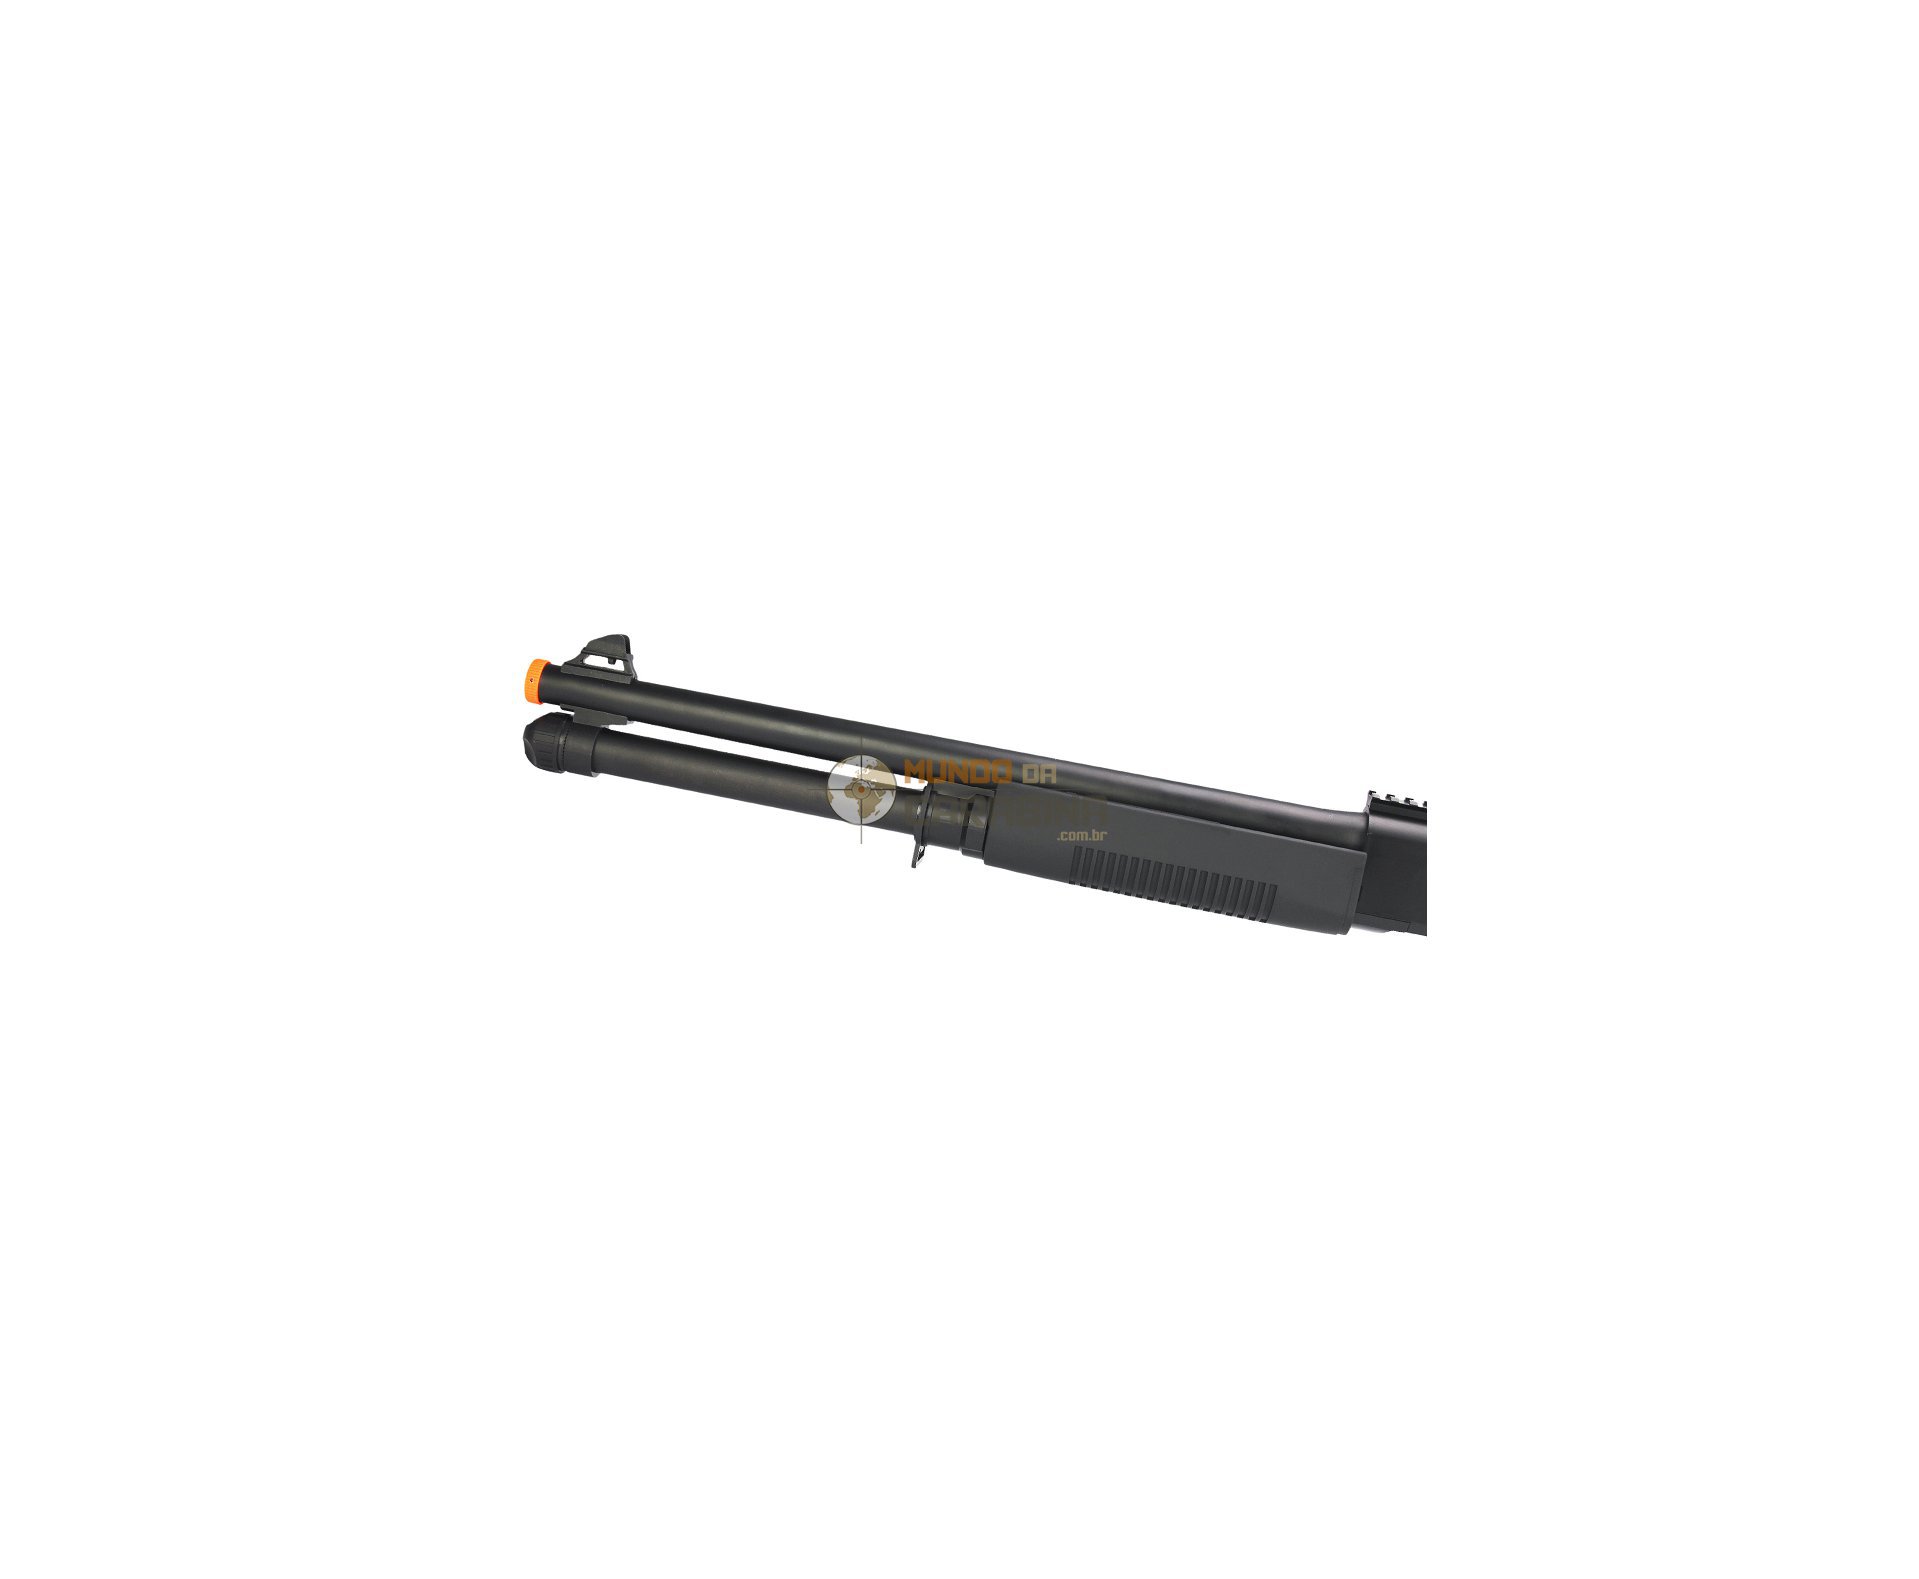 Shotgun M56dl - Cano Longo/coronha Retrátil - Cal 6.0mm - Csi